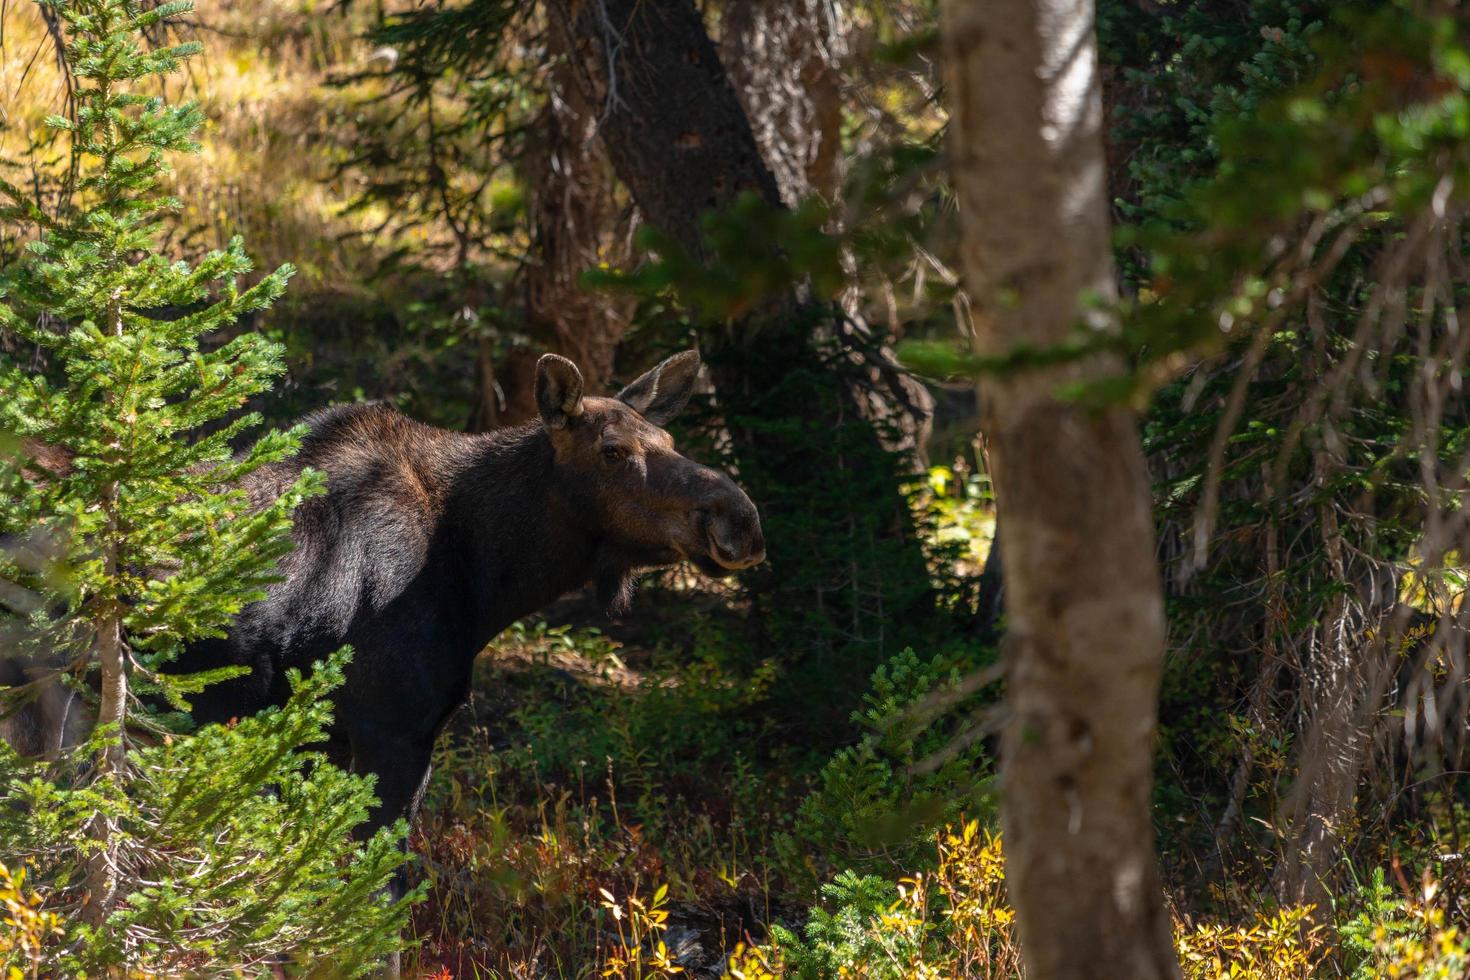 The wandering moose photo